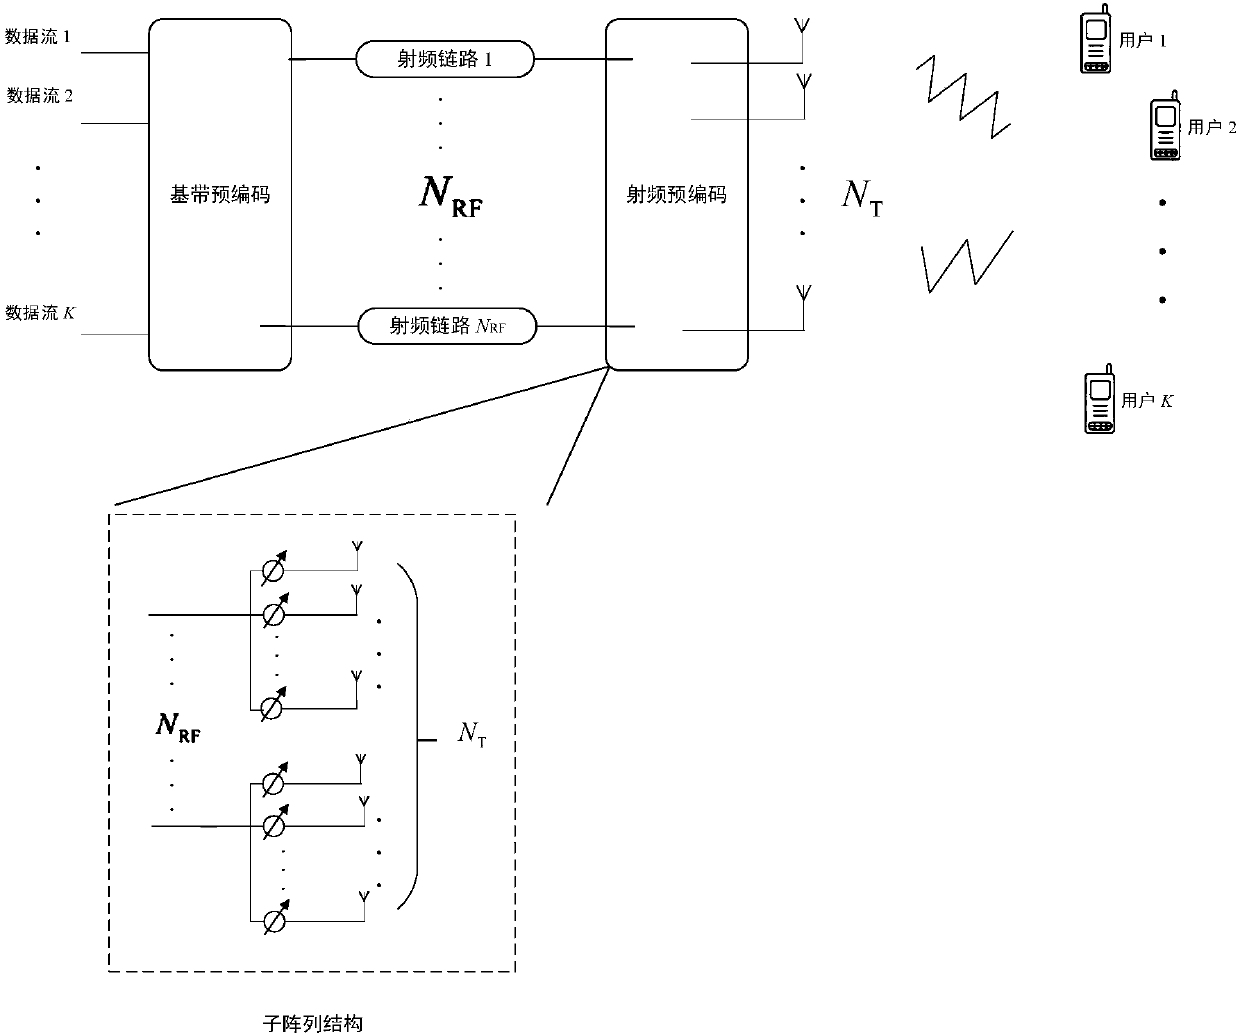 Multi-user large-scale MIMO (Multiple-Input Multiple-Output) hybrid precoding energy efficiency optimization method